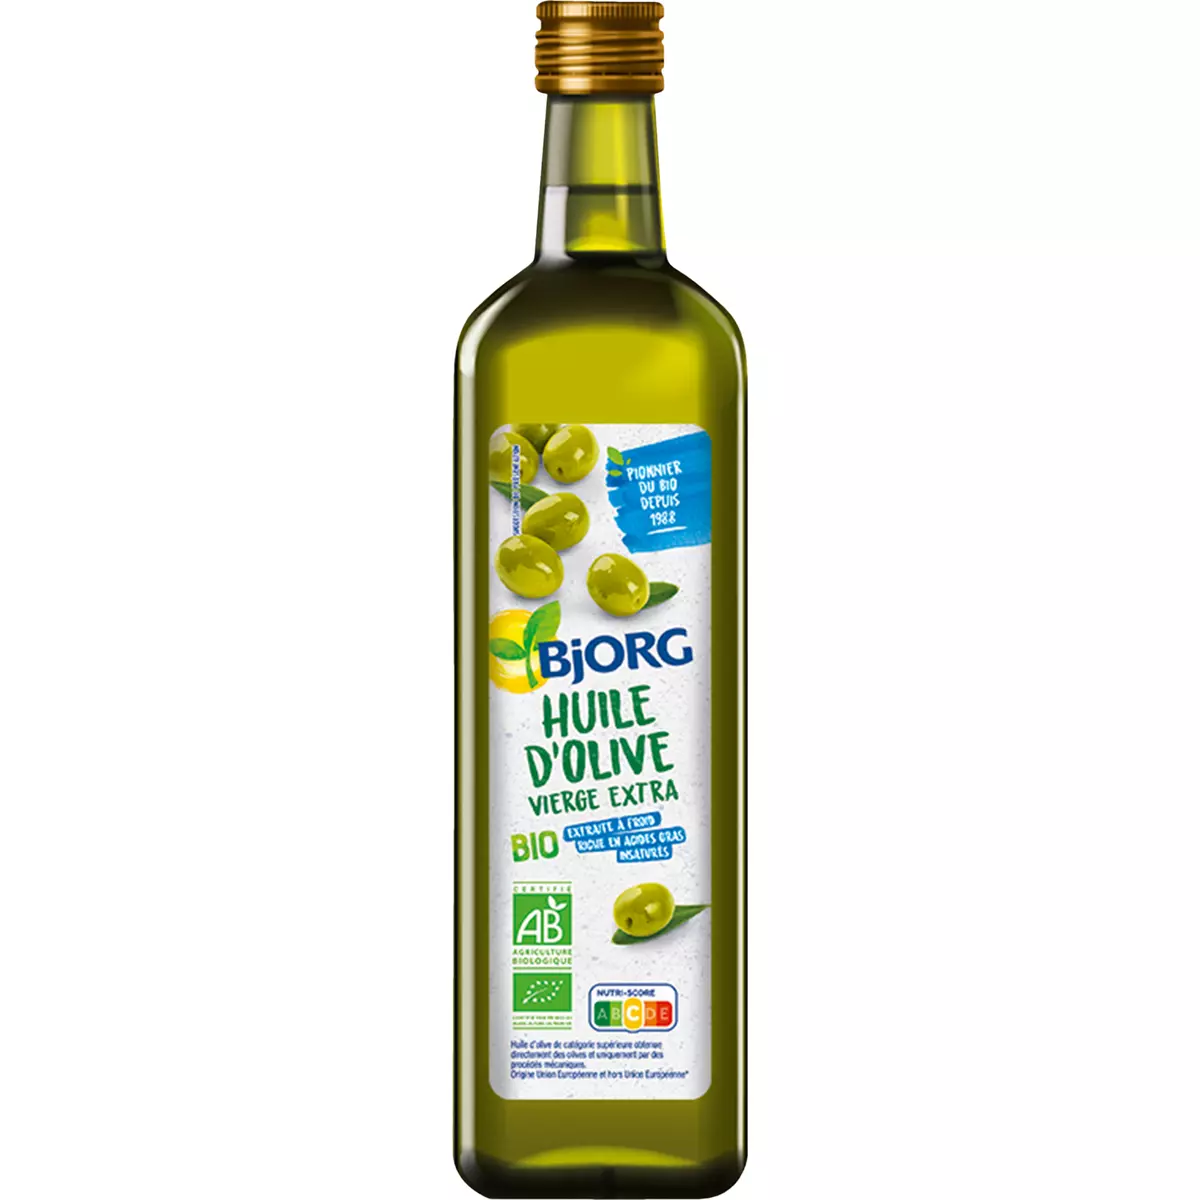 BJORG Huile d'olive vierge extra bio 75cl